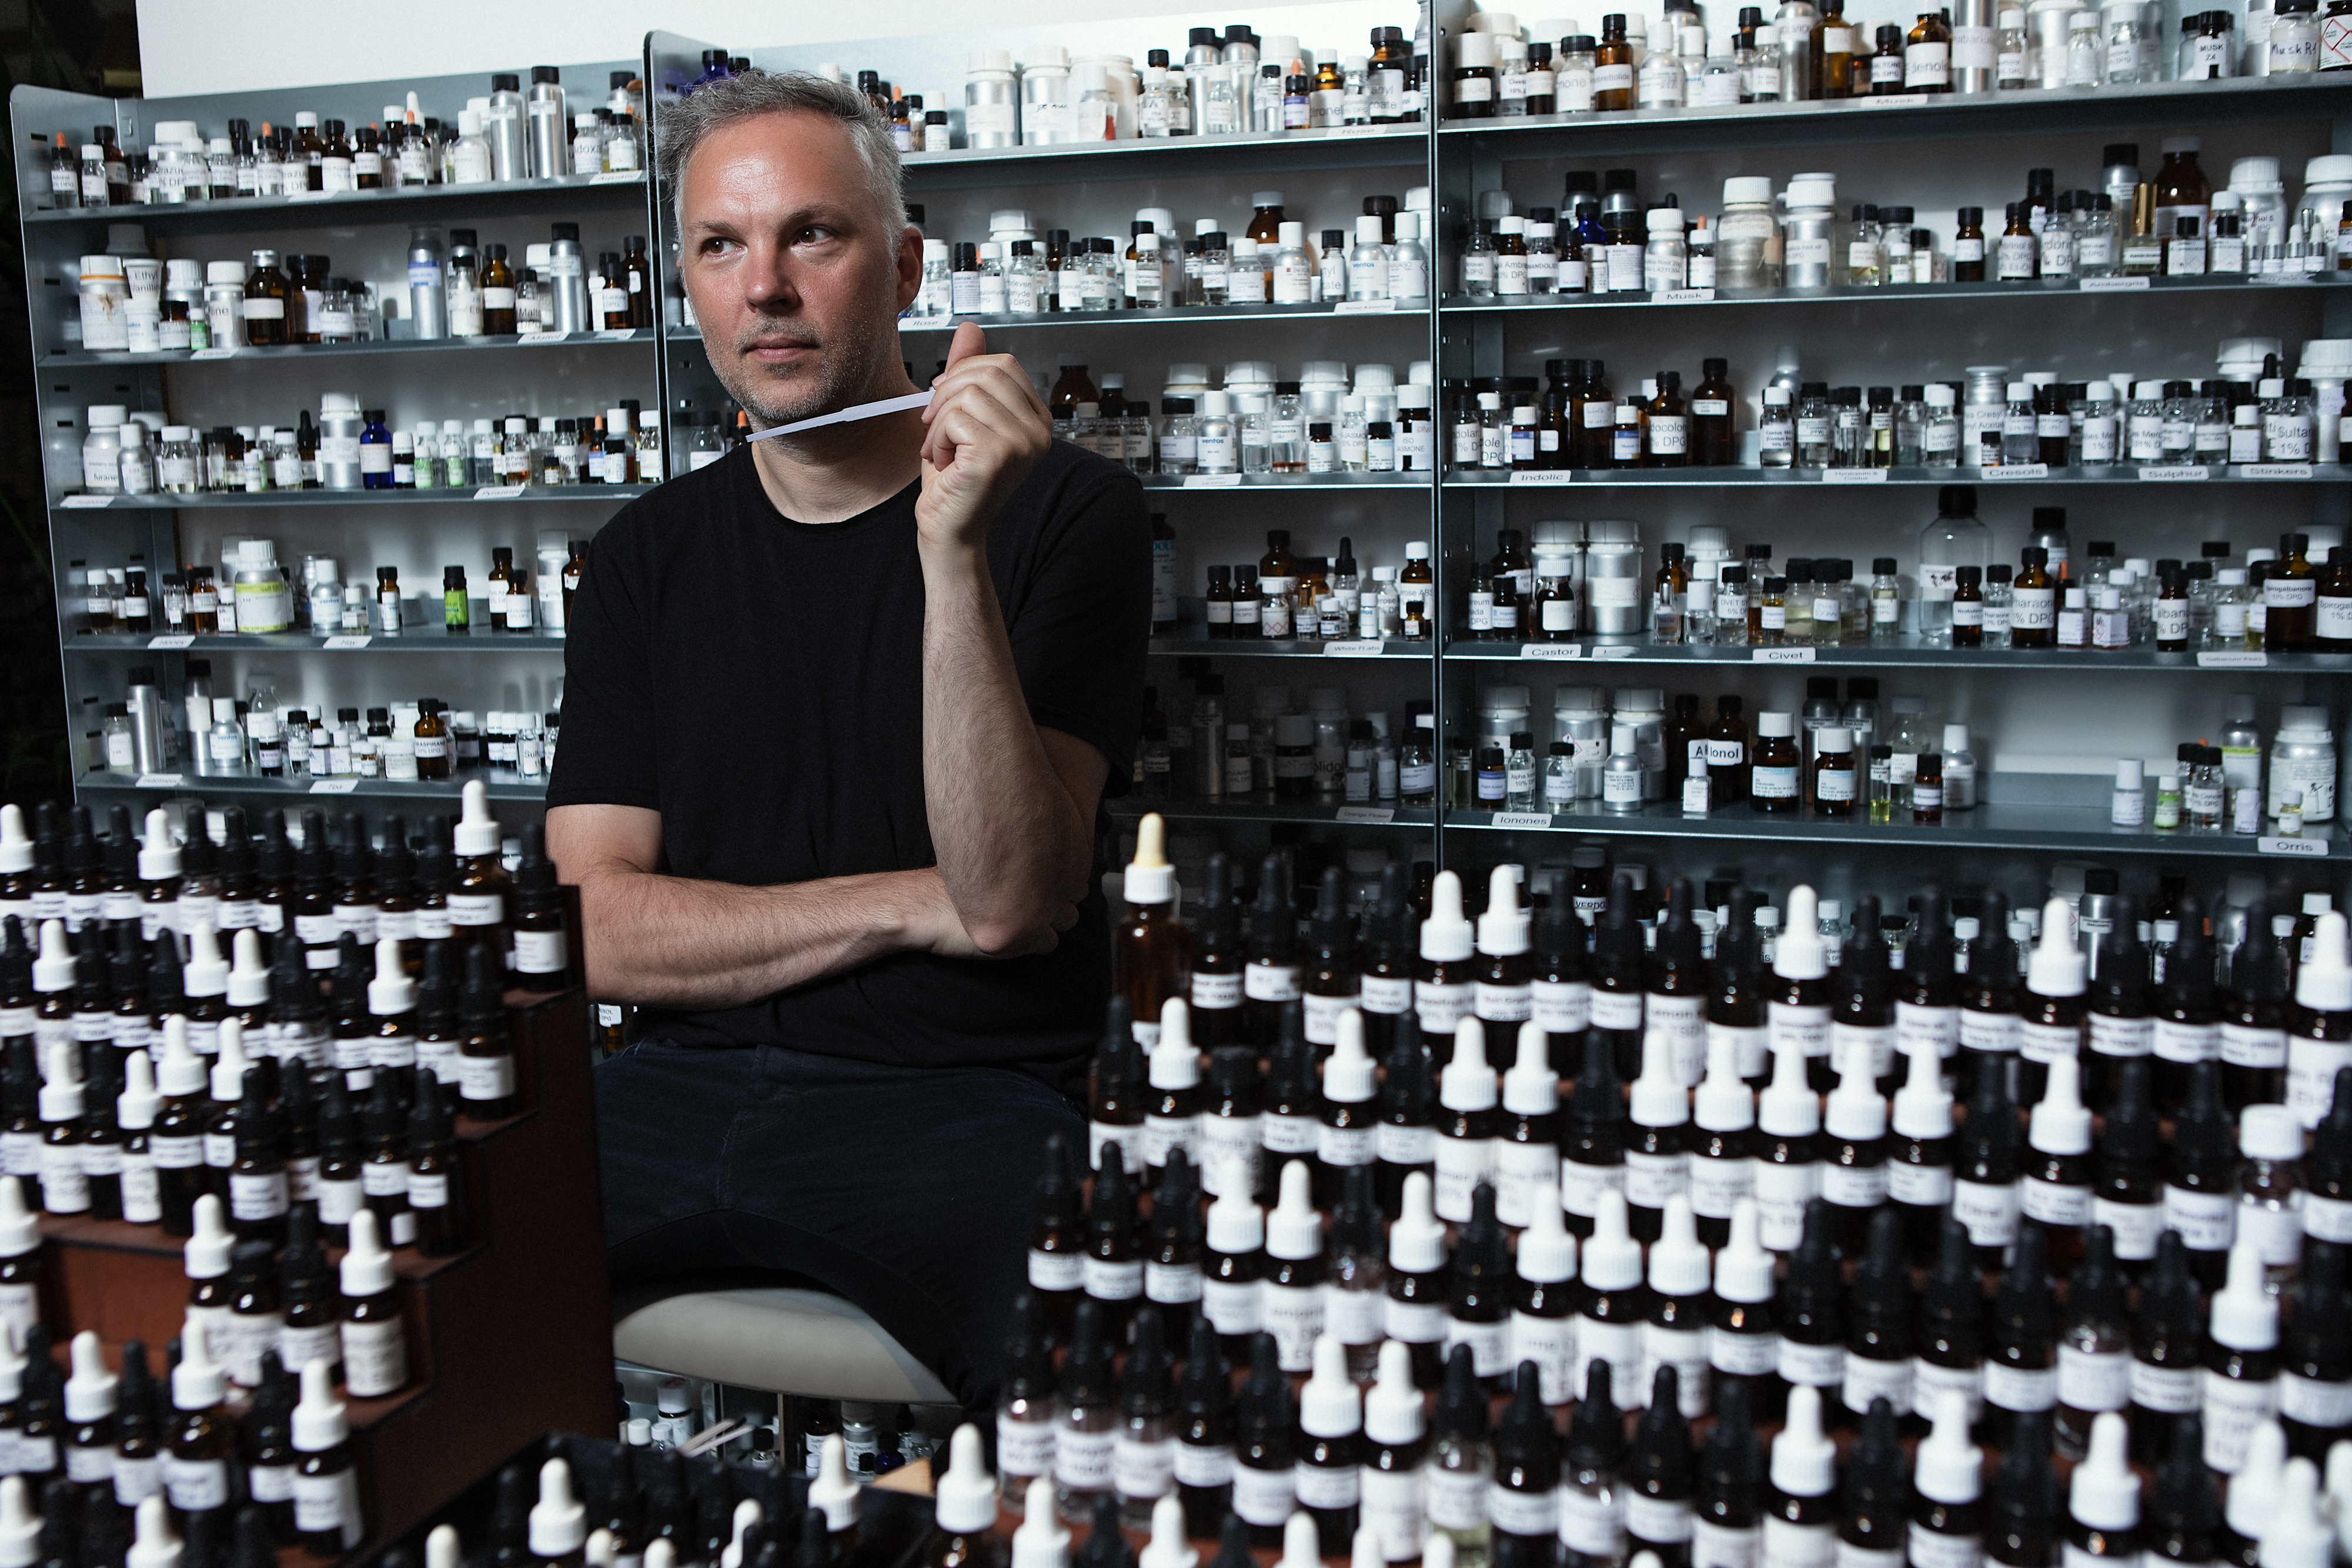 O Σπύρος Δροσόπουλος είναι η μύτη της ολλανδικής εταιρείας αρωμάτων “Baruti parfums”.